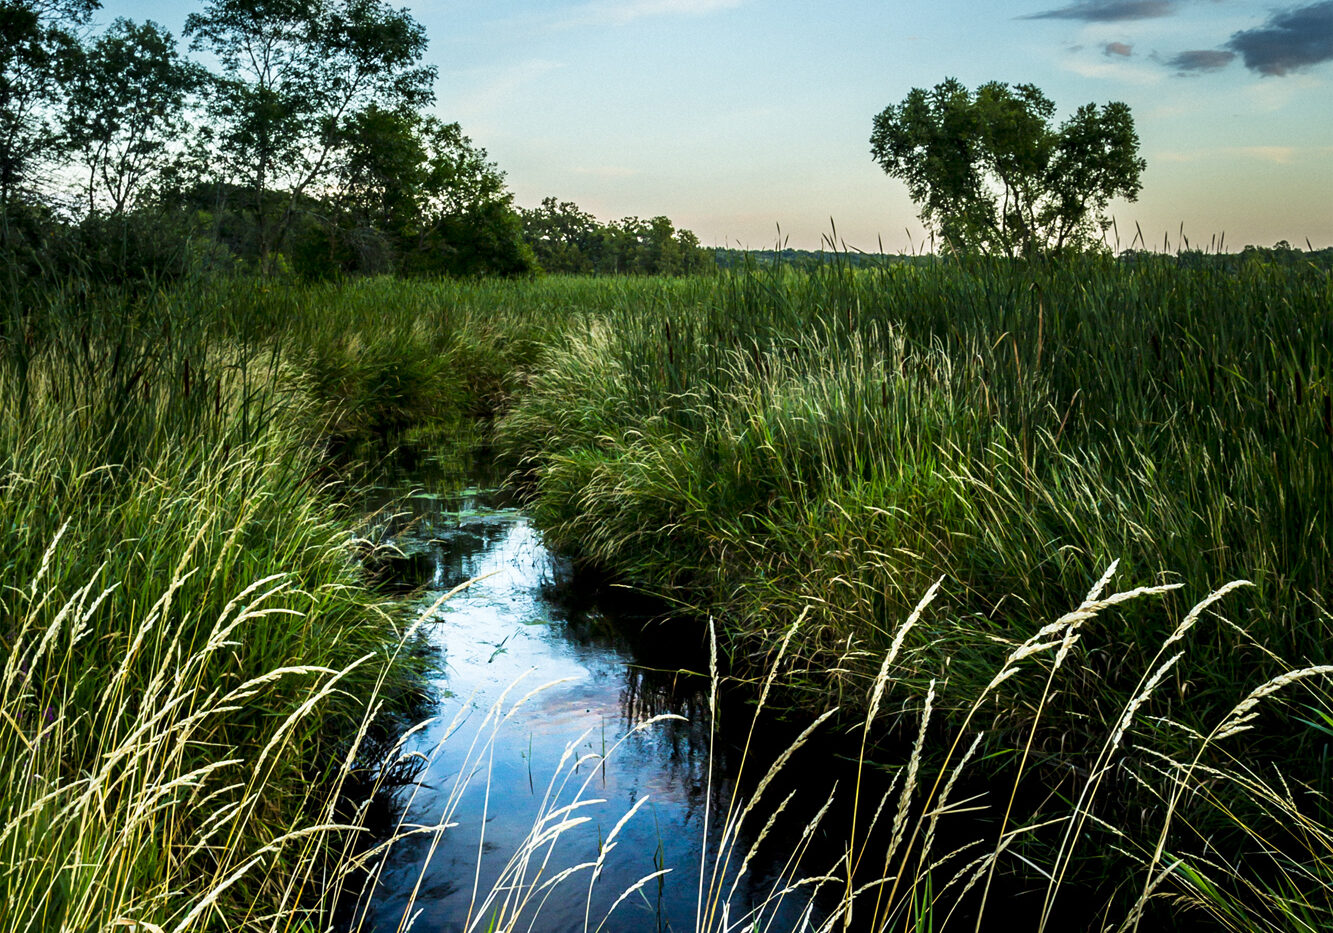 A landscape of a little creek running through a field of tall grasses during golden hour